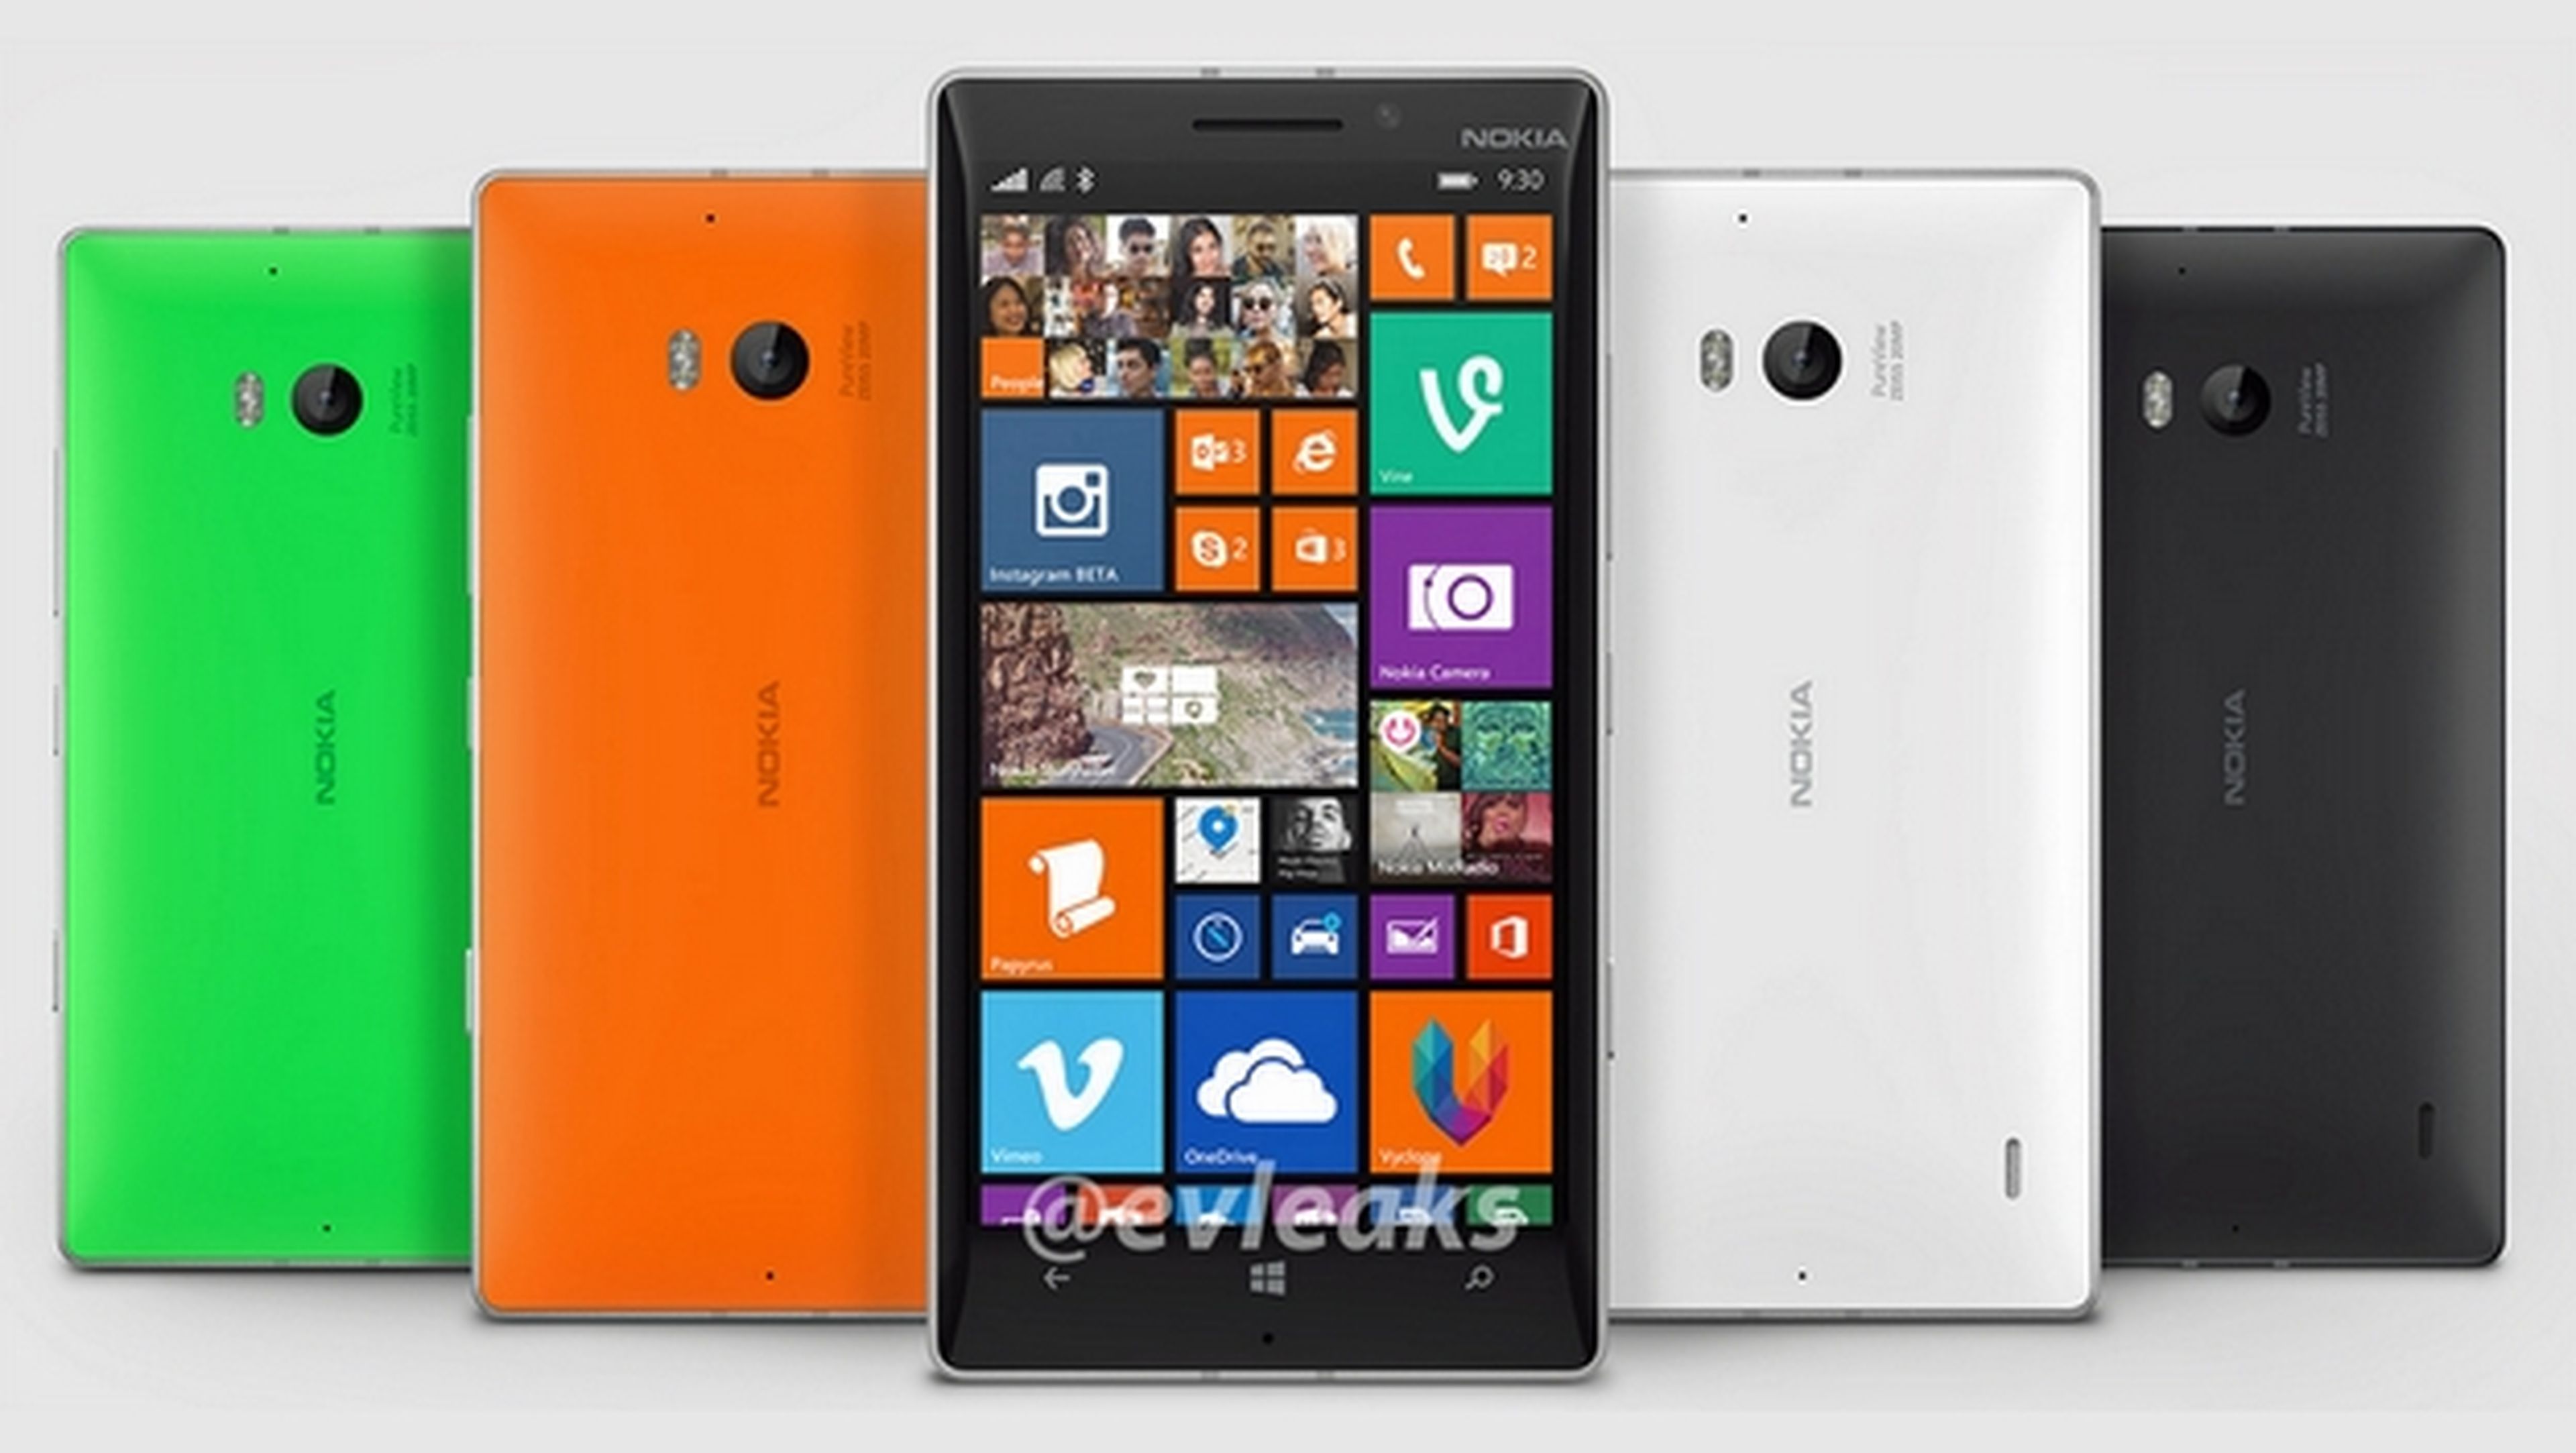 Primera imagen del Nokia Lumia 930, con Windows Phone 8.1